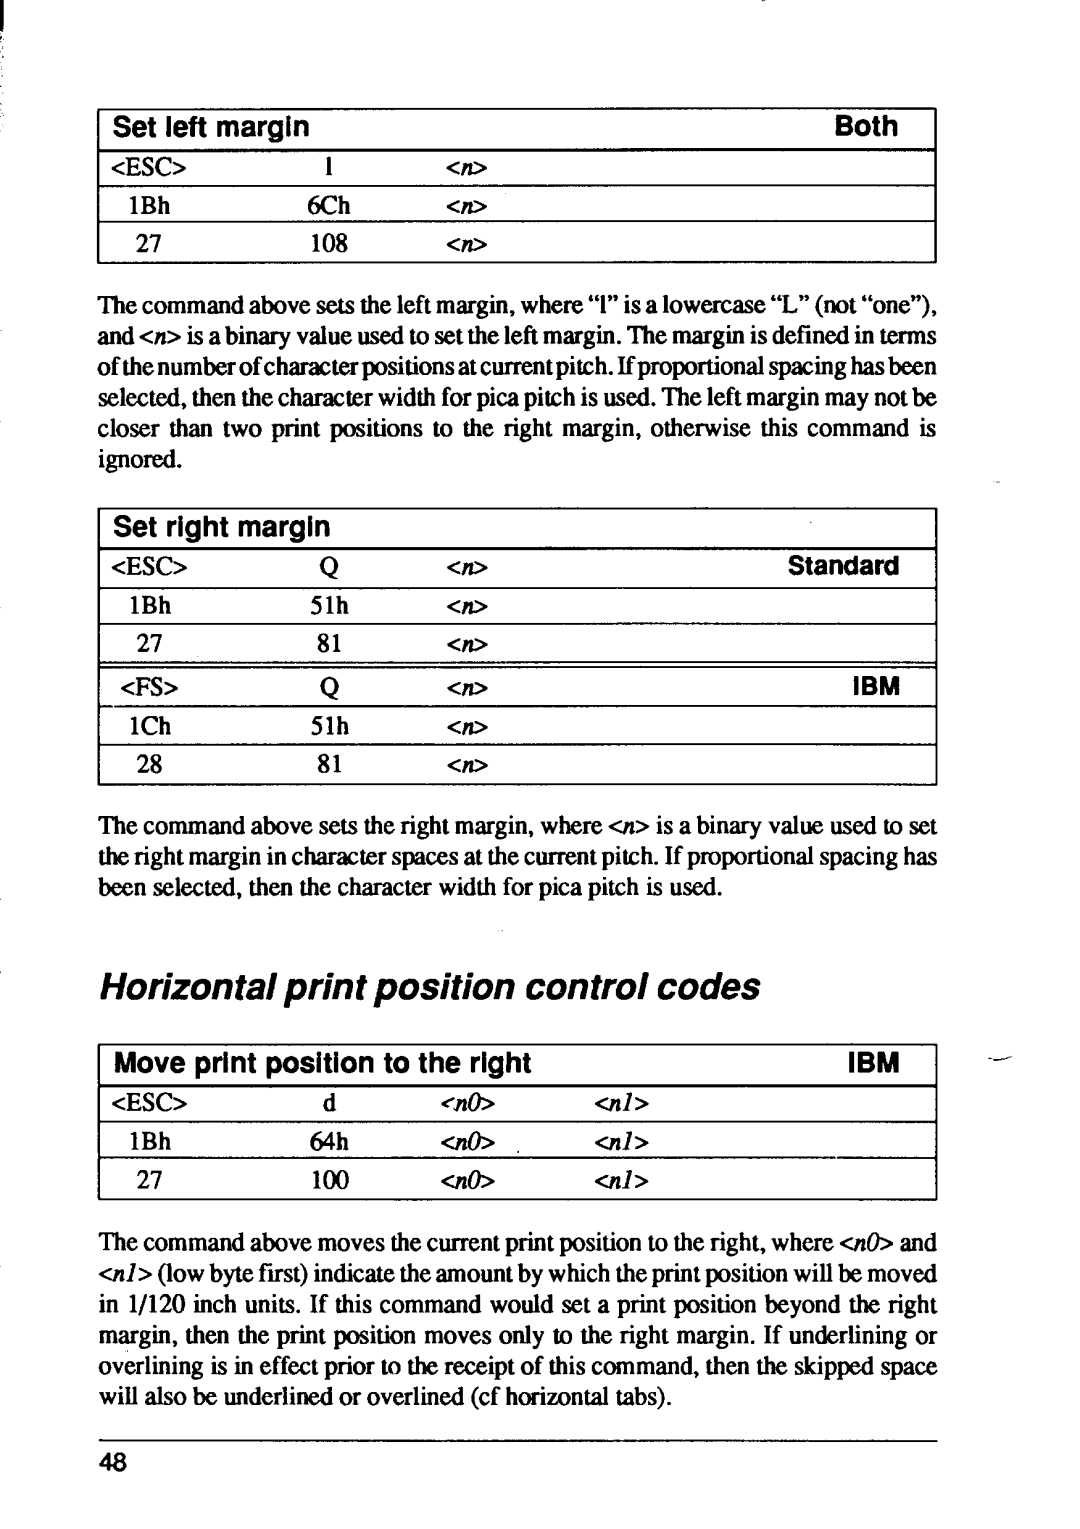 Star Micronics XB24-10 Horizontal print position control codes, 1Set left margin, Both, Set right margin, Standard 